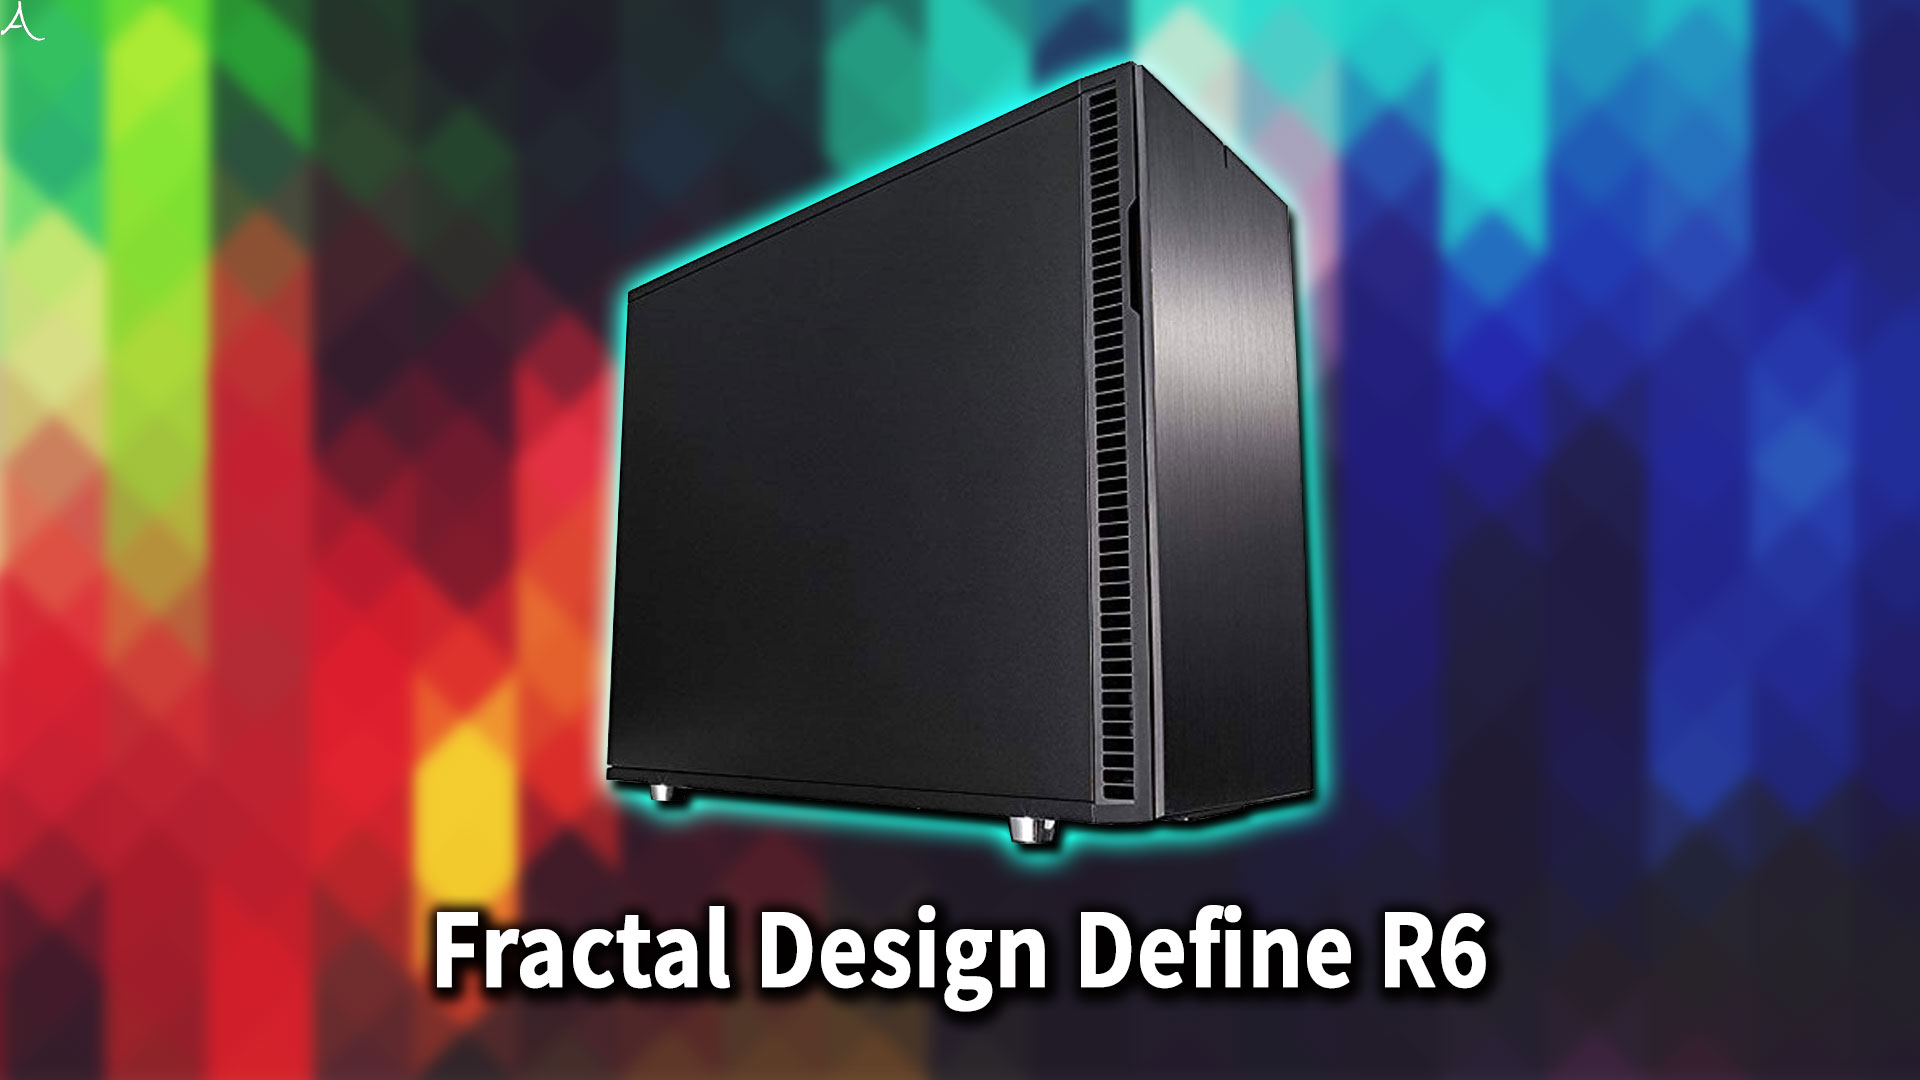 ｢Fractal Design Define R6｣のサイズ・大きさはどれくらい？